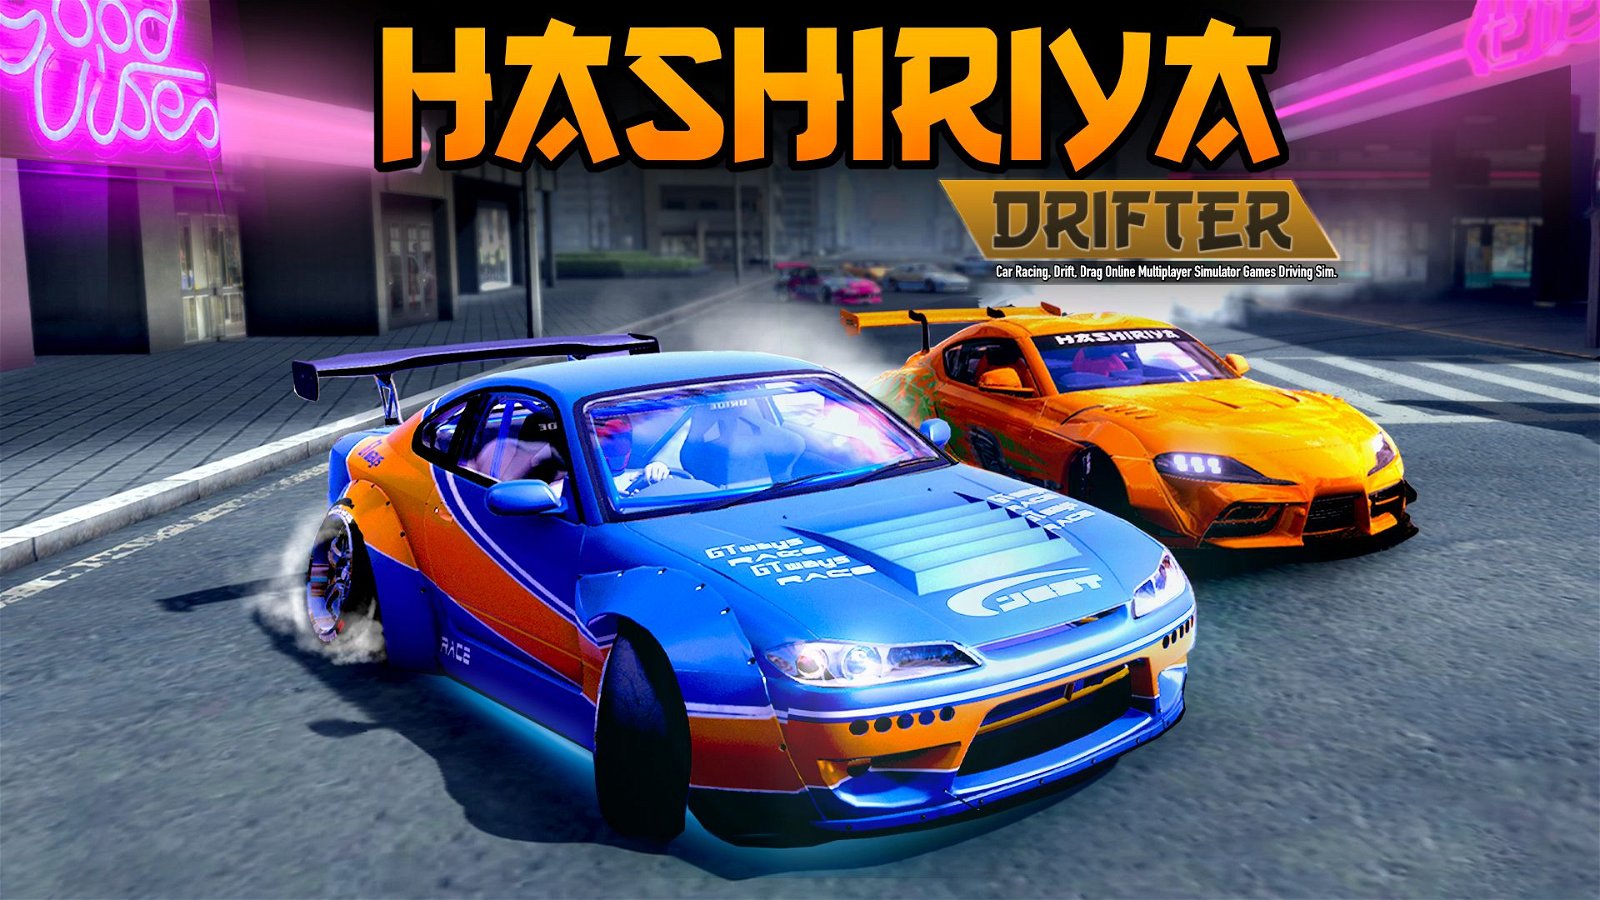 Image of Hashiriya Drifter-Car Racing,Drift,Drag Online Multiplayer Simulator Games Driving Sim.